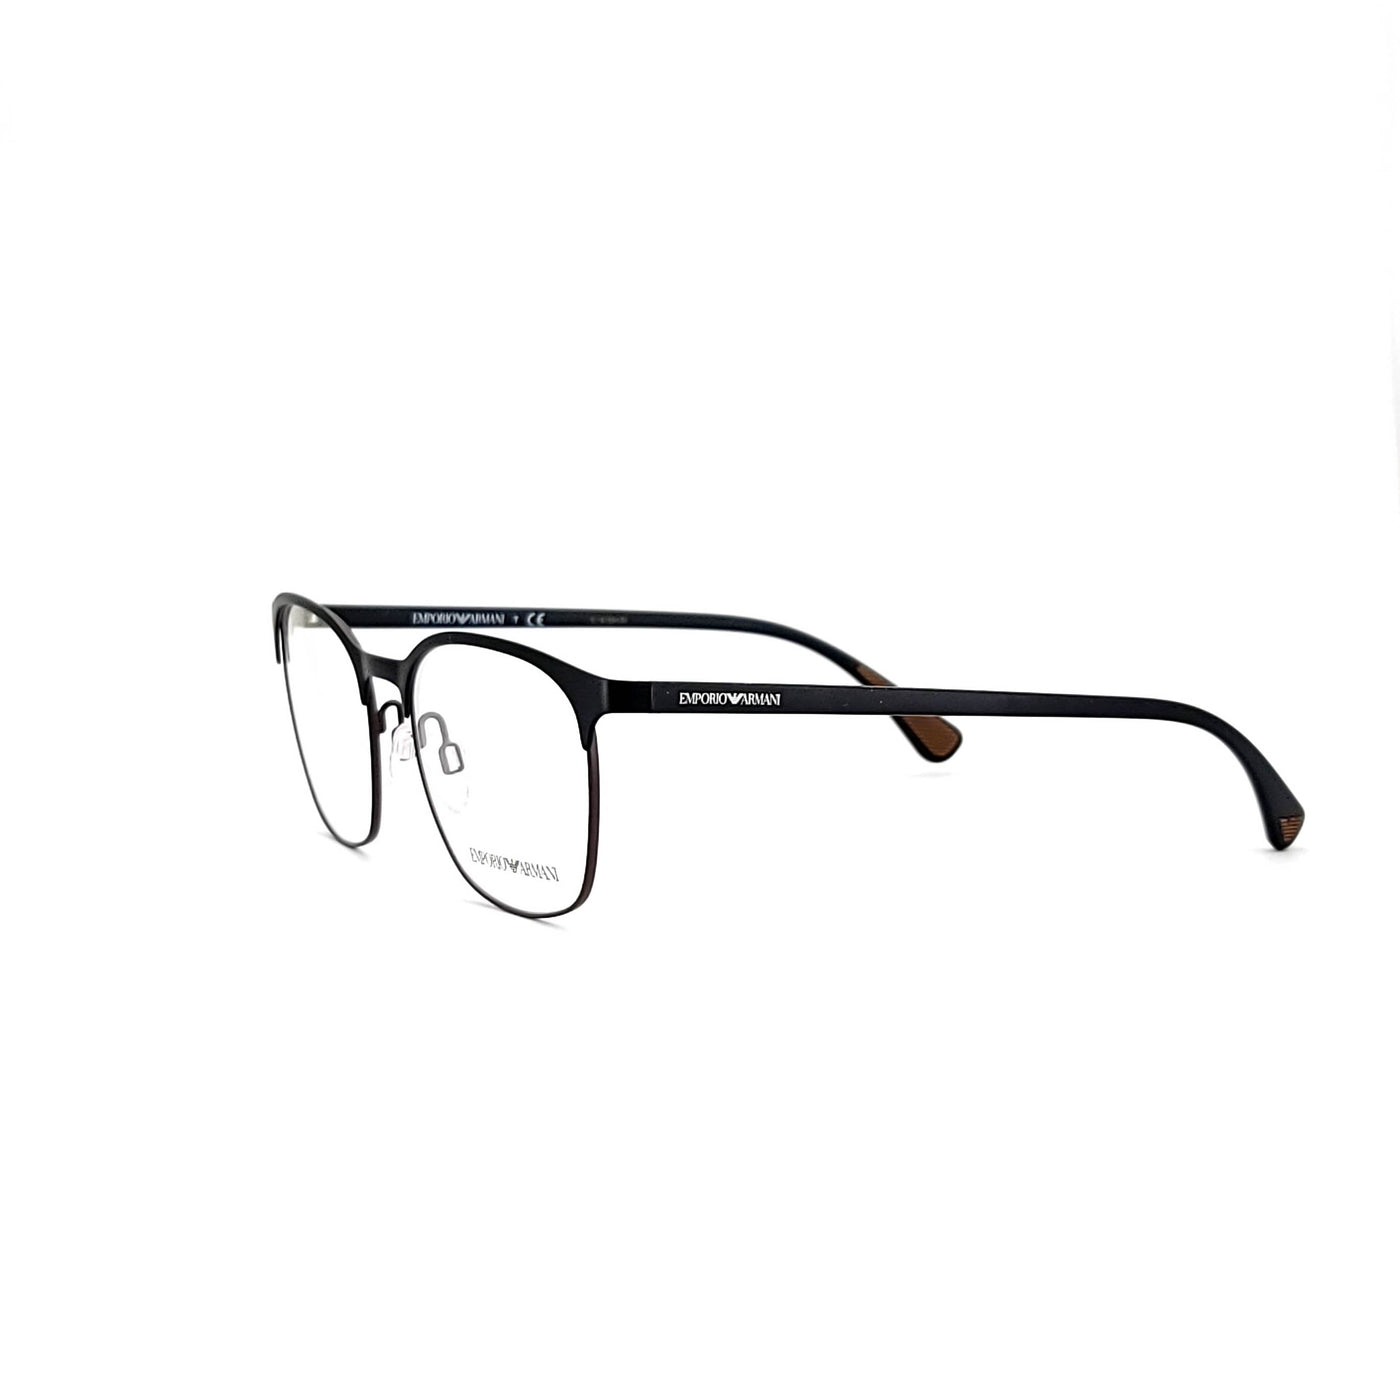 Emporio Armani EA1114/3120 | Eyeglasses - Vision Express Optical Philippines